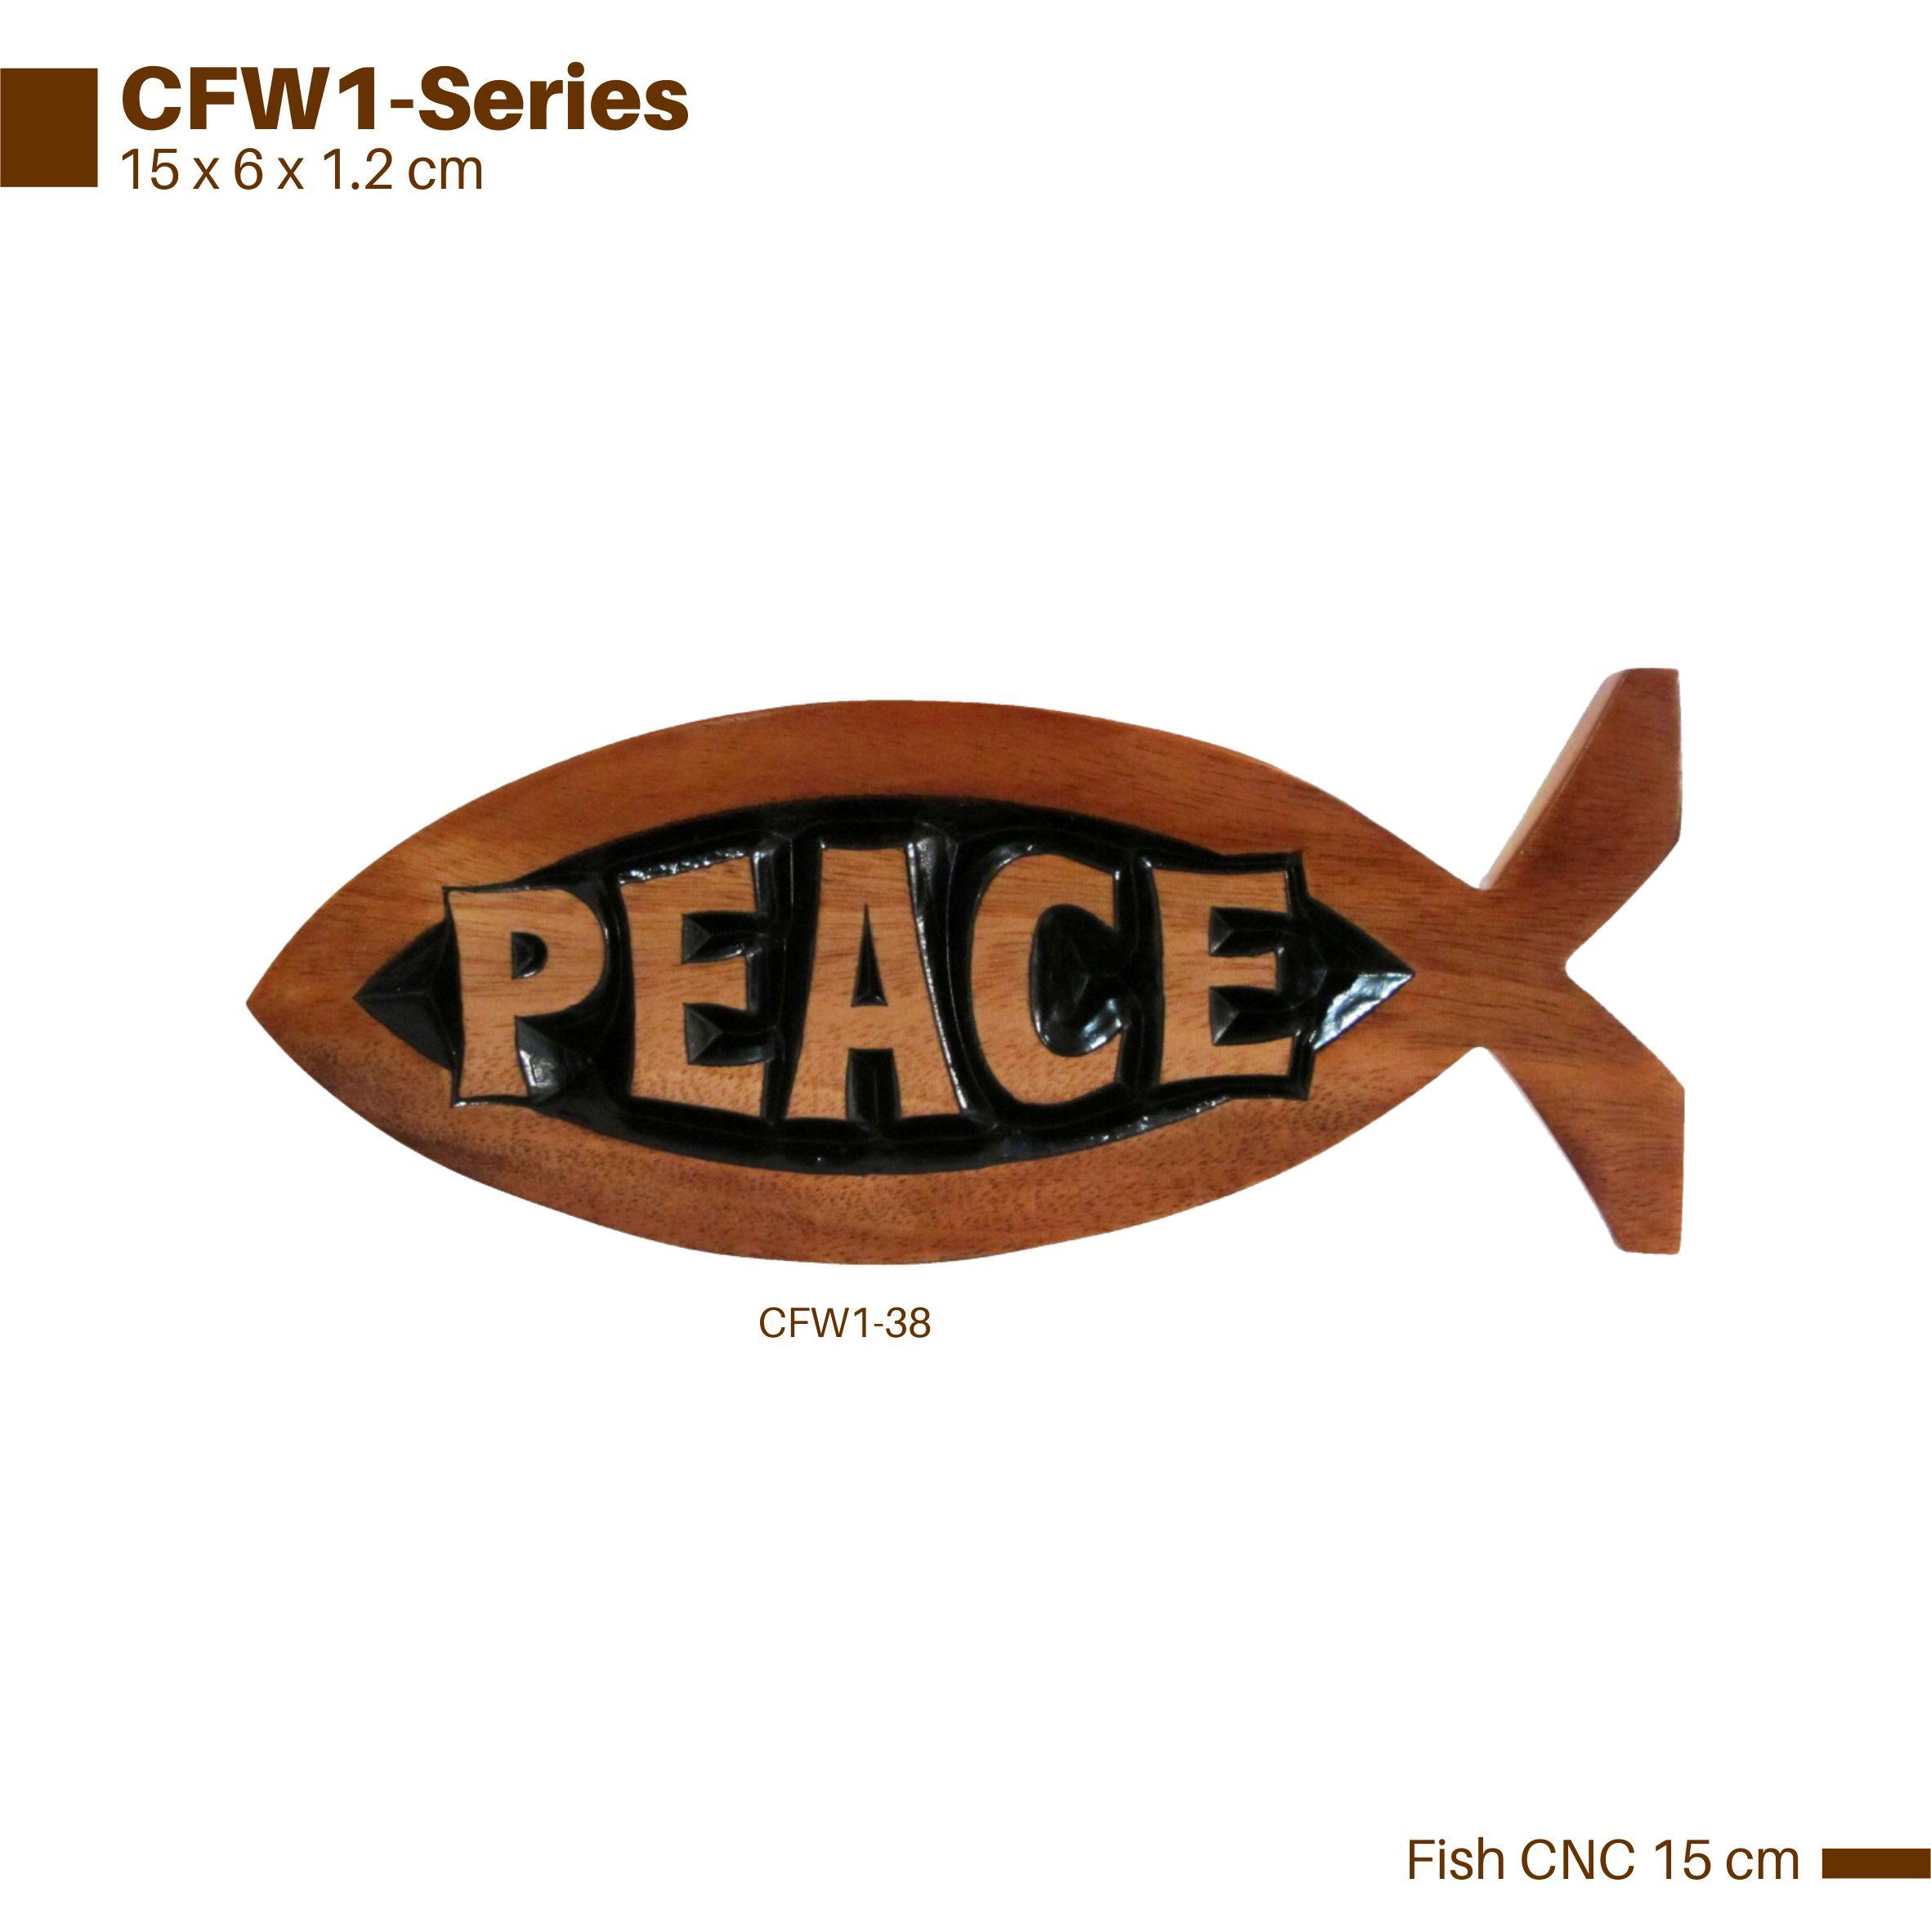 CFW1-Series